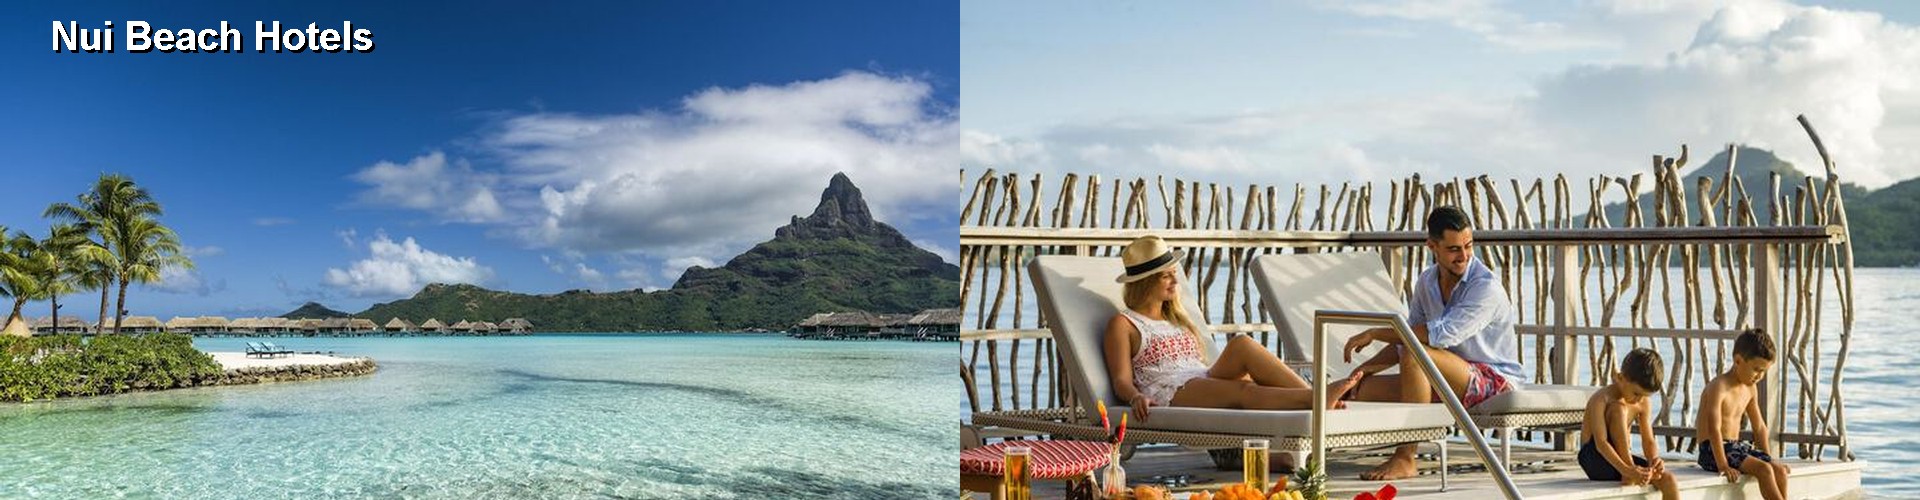 5 Best Hotels near Nui Beach